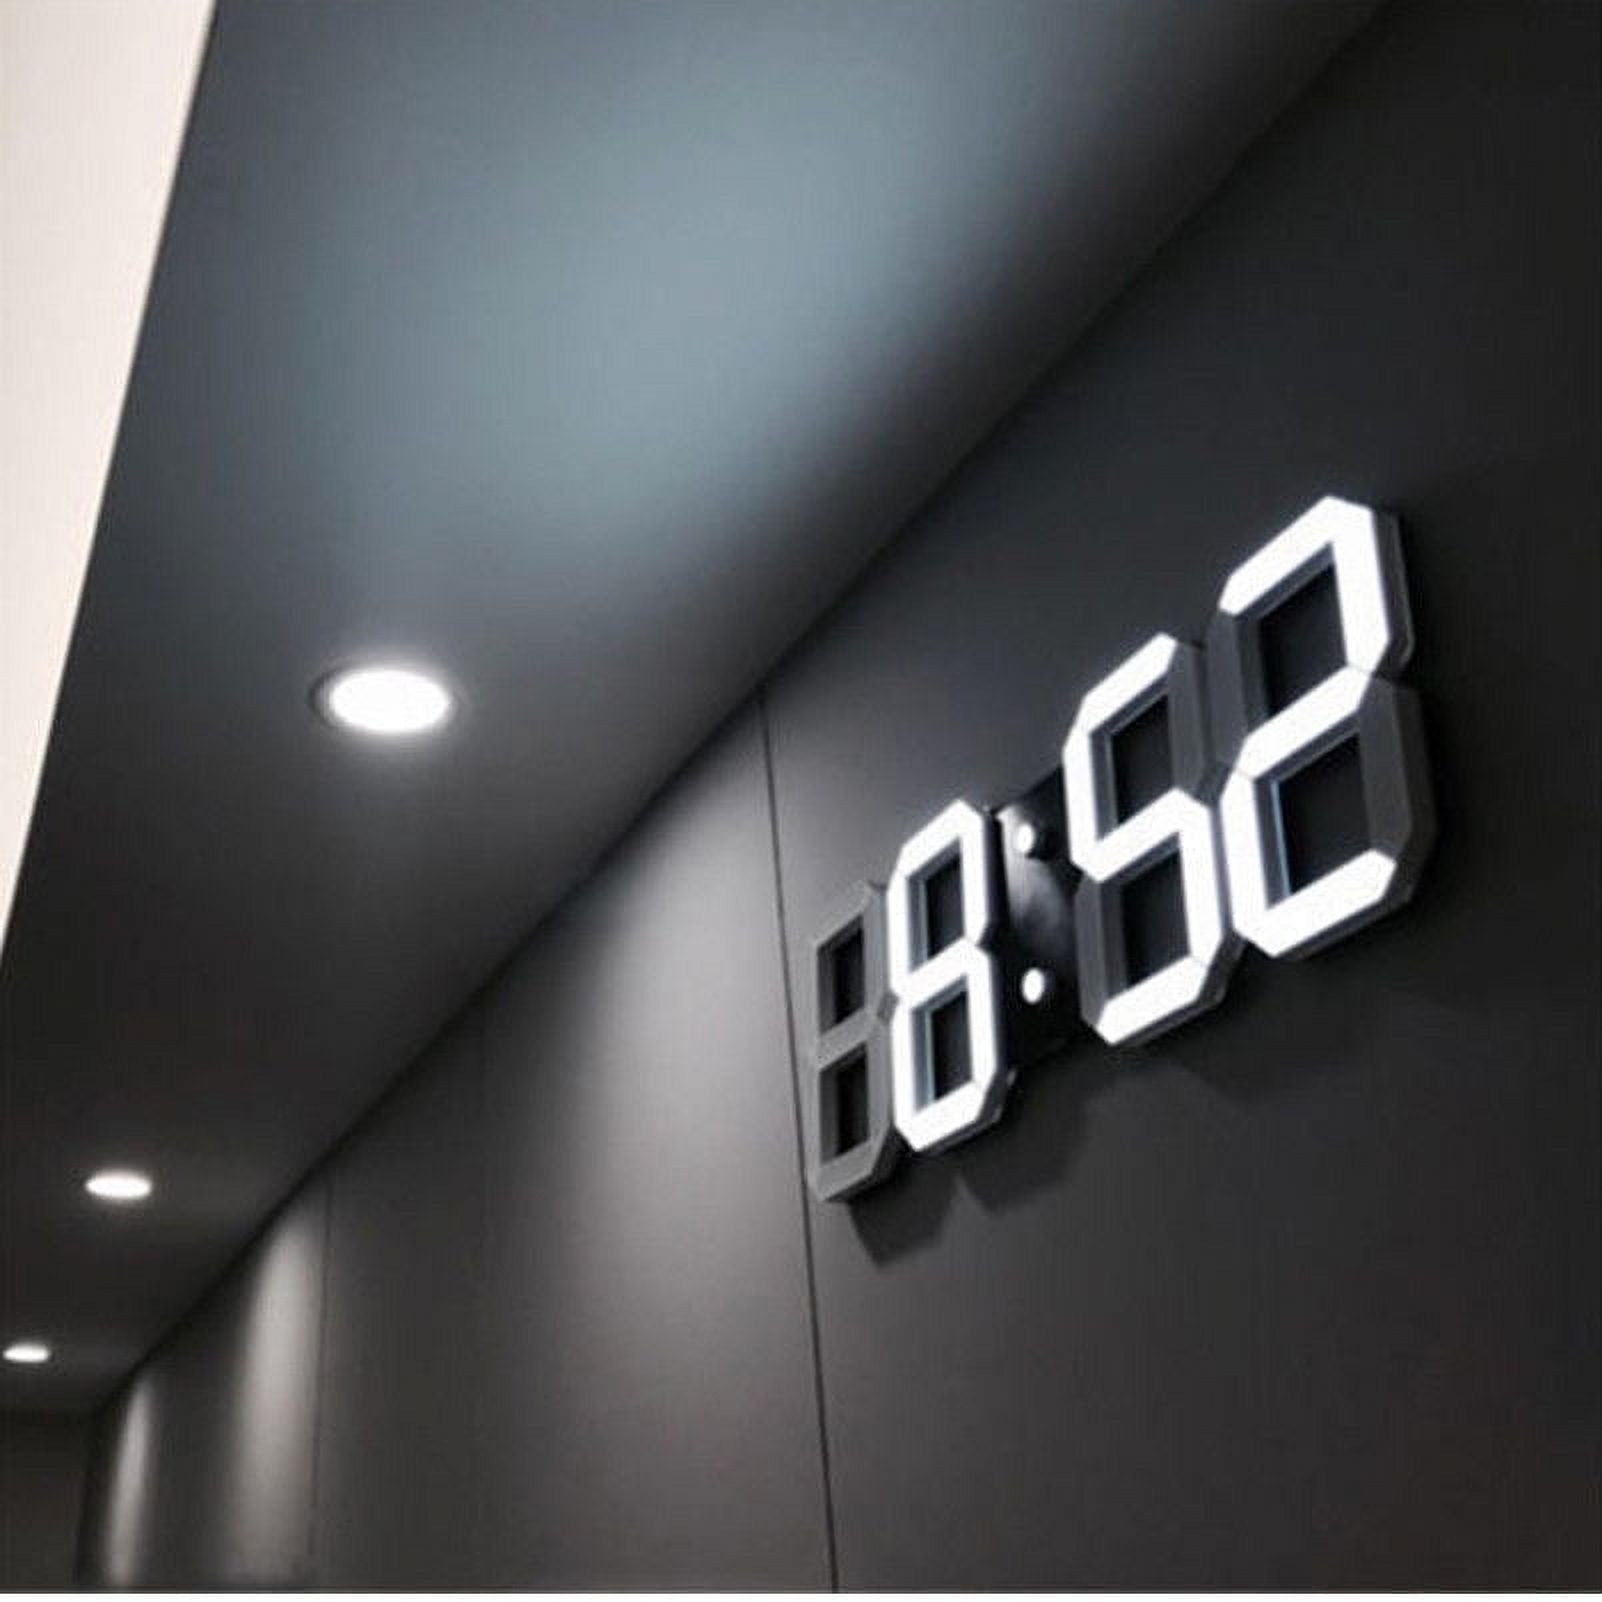 ITD Gear Digital Wall Clocks in White color, LED, LED Digital Alarm Clock - image 1 of 5